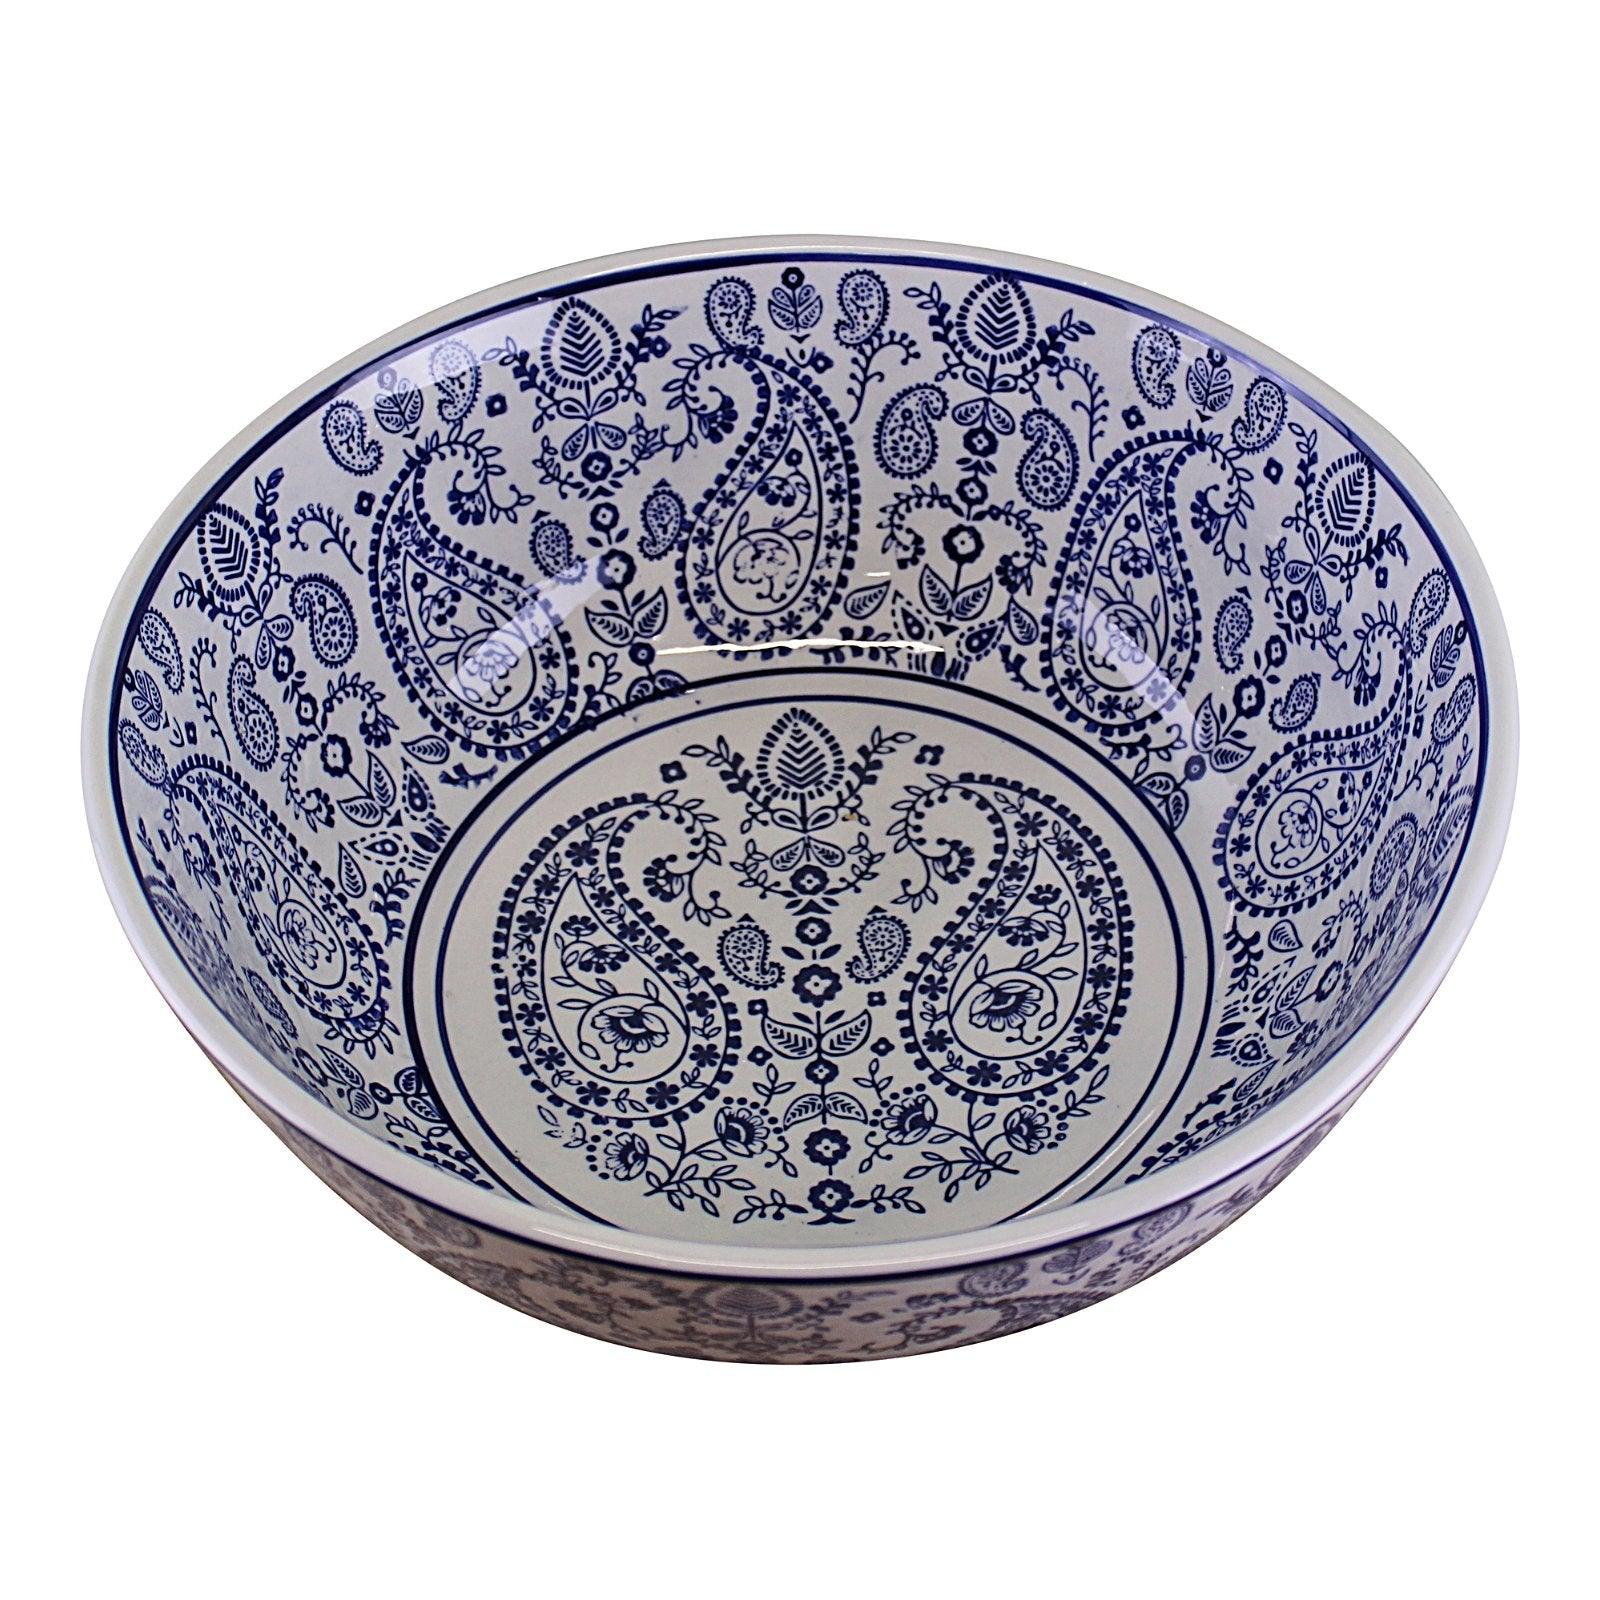 View Large Ceramic Bowl Vintage Blue White Paisley Design information